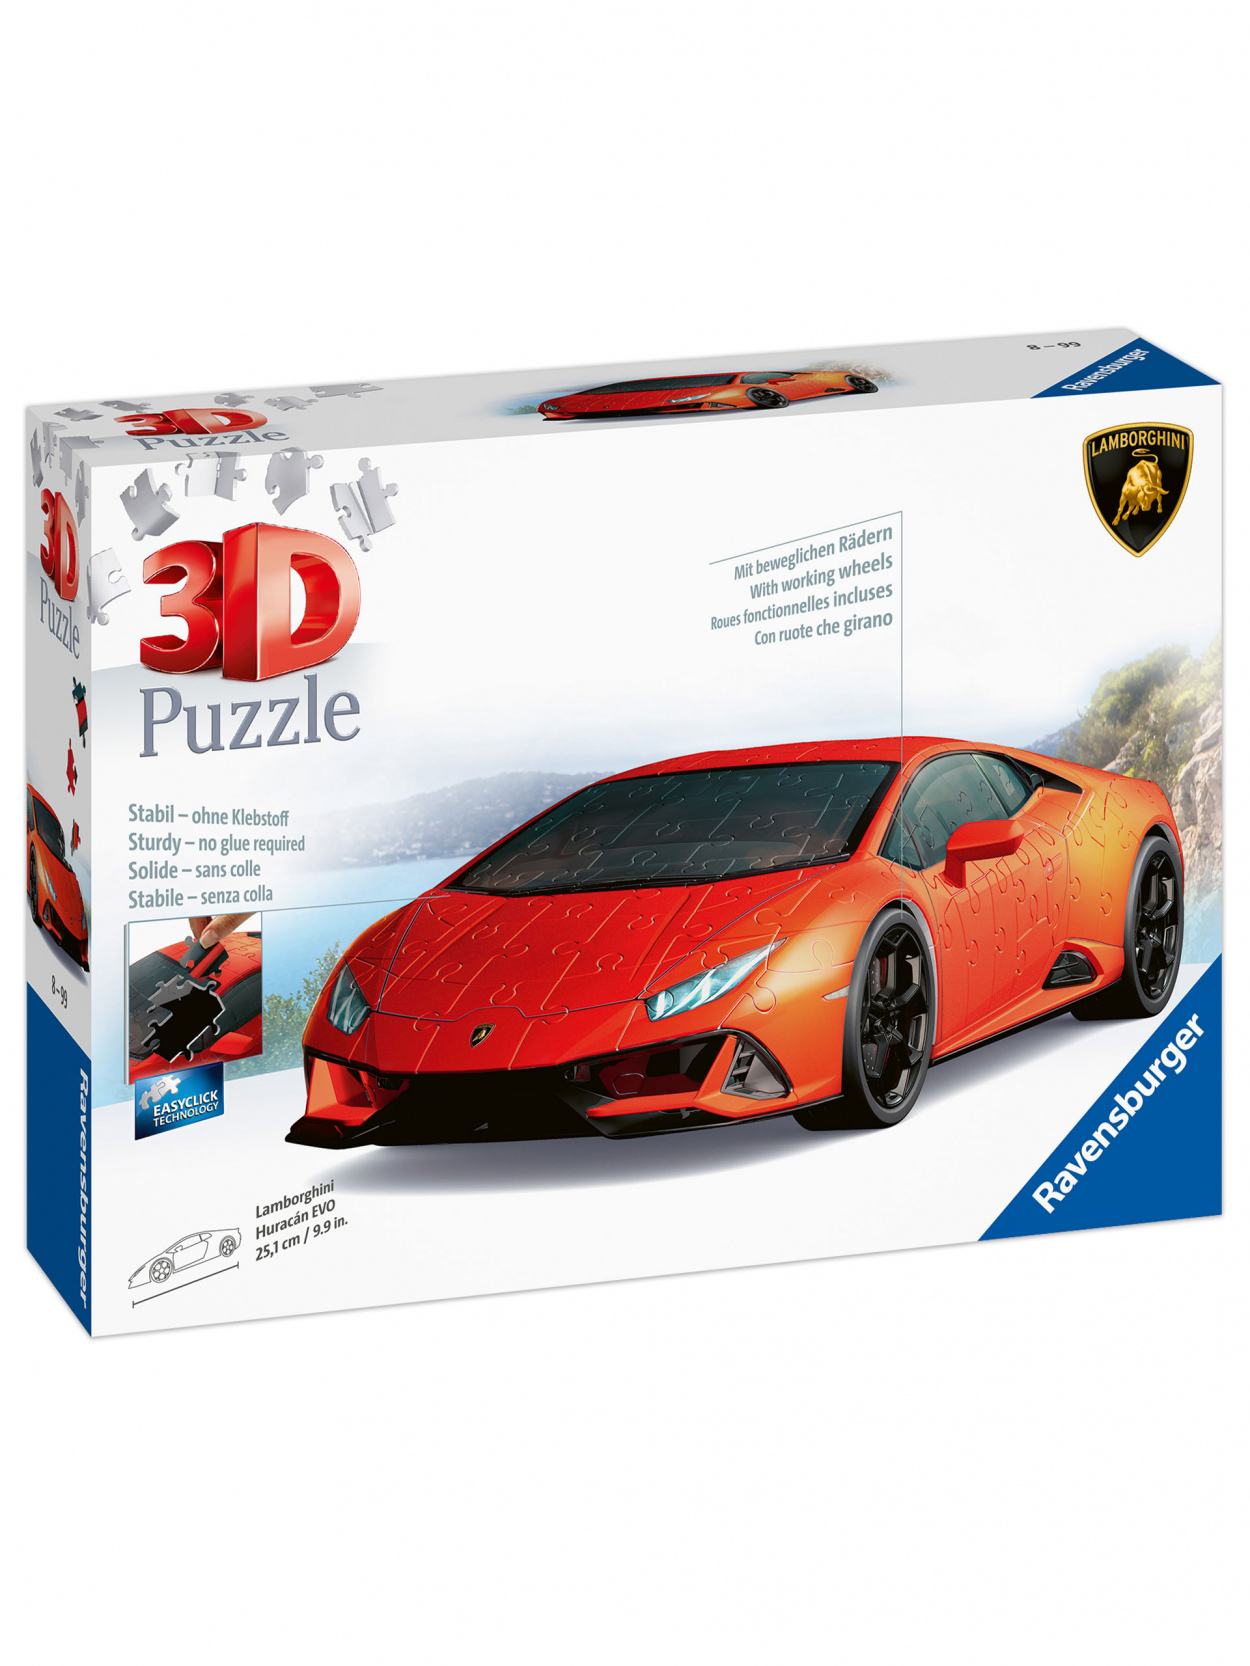 Puzzle 3D - Lamborghini Huracán Evo - 140 pièces - Label Emmaüs